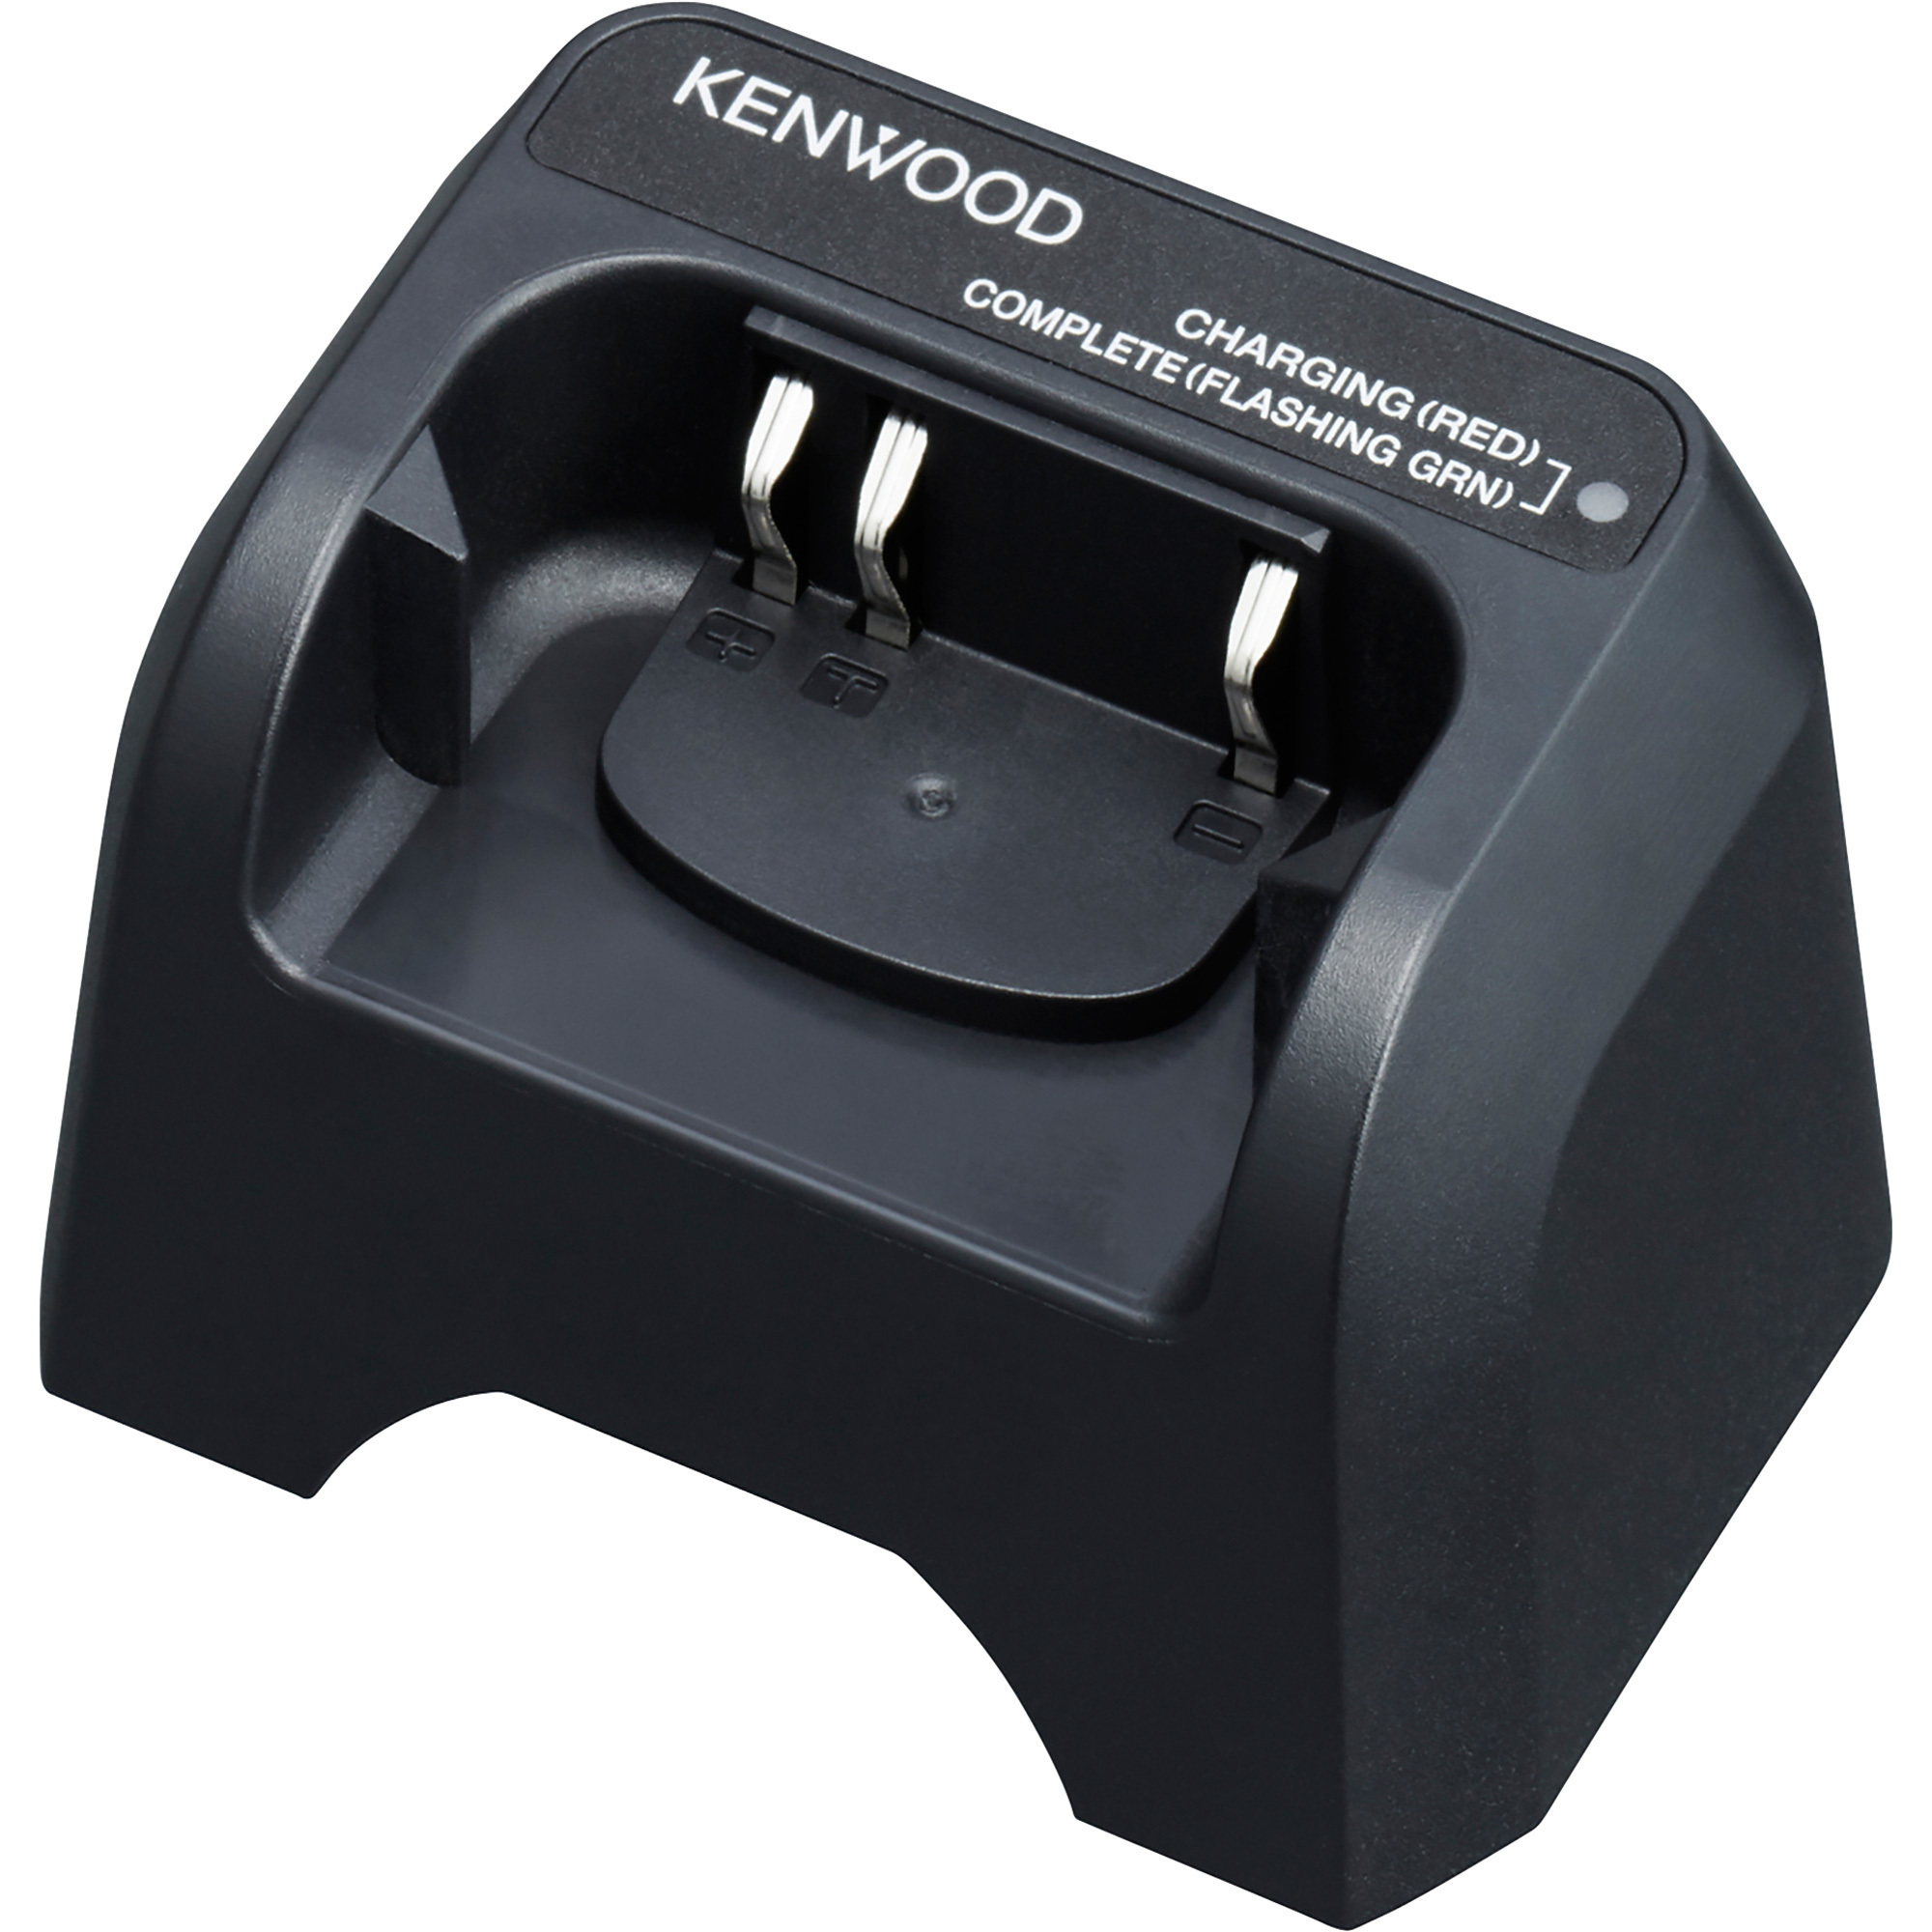 Kenwood Rapid Charger â For Charging the NX-P500 Radio, Model KSC-50K